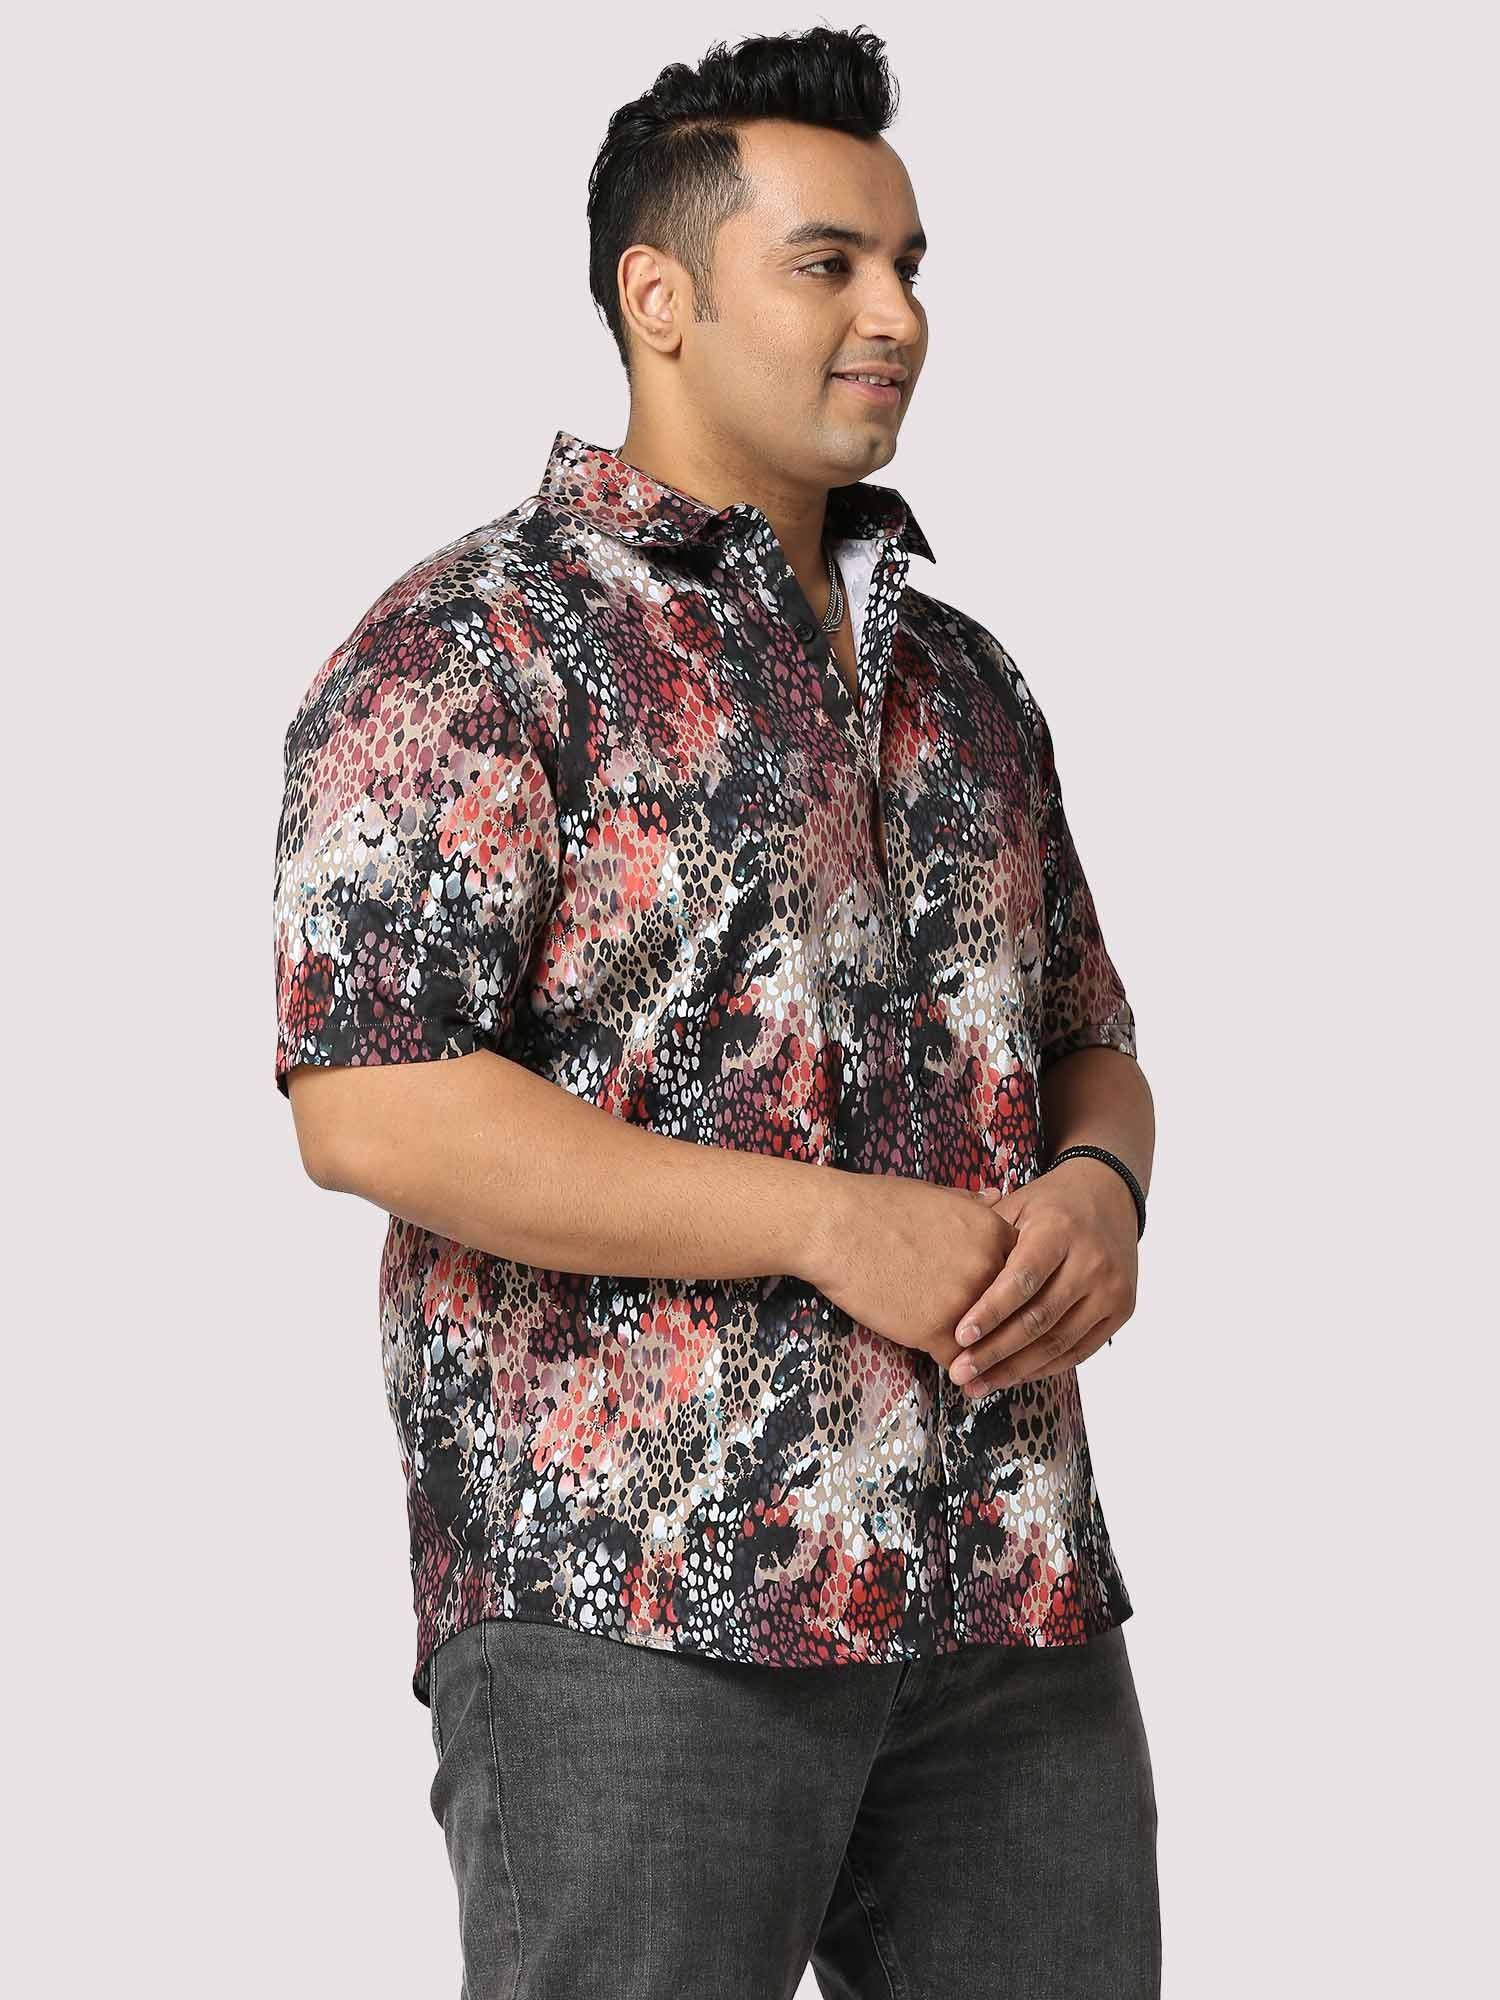 Disco Half Sleeves Digital Printed Shirt - Guniaa Fashions